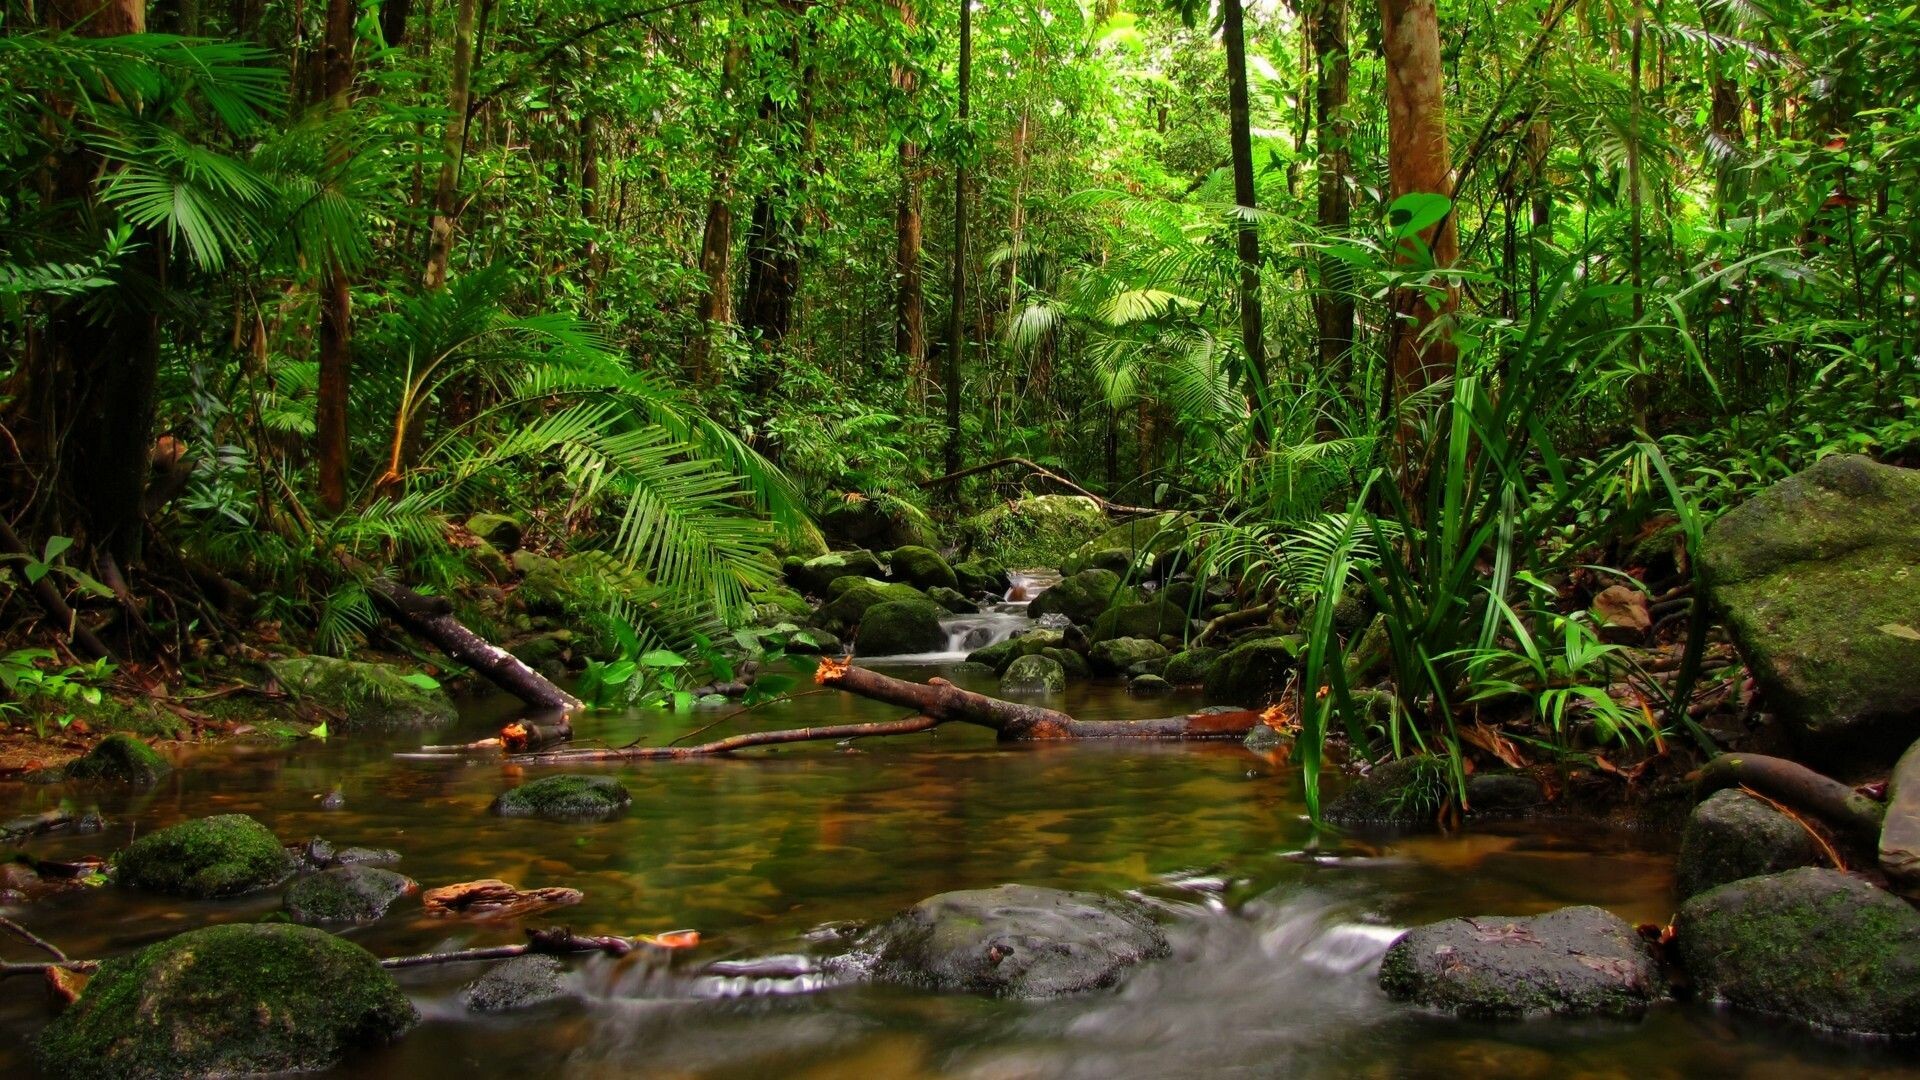 Lush foliage, Tropical paradise, Exotic wildlife, Serene waterfalls, 1920x1080 Full HD Desktop